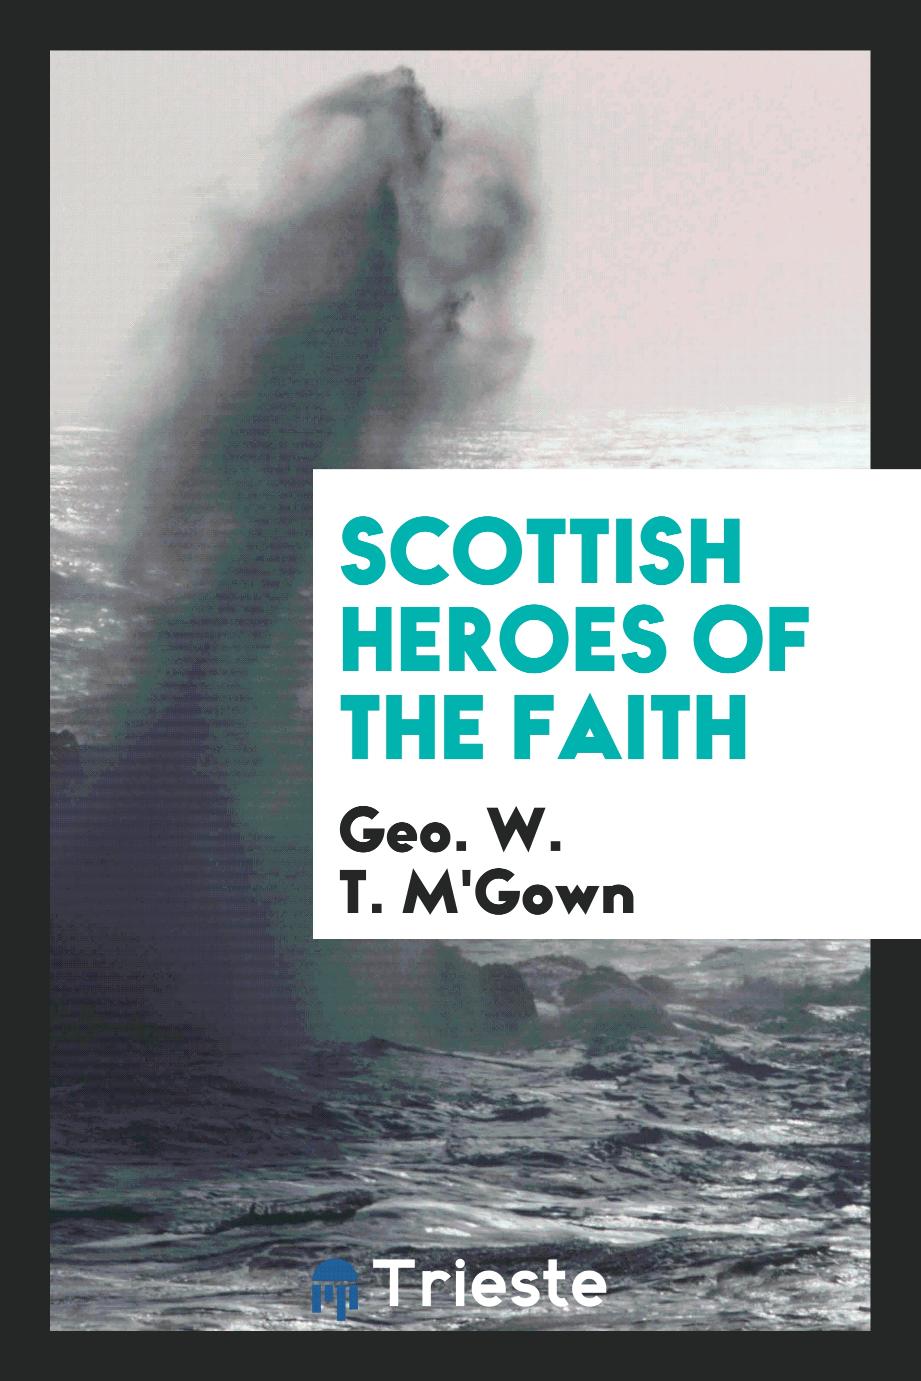 Scottish heroes of the faith